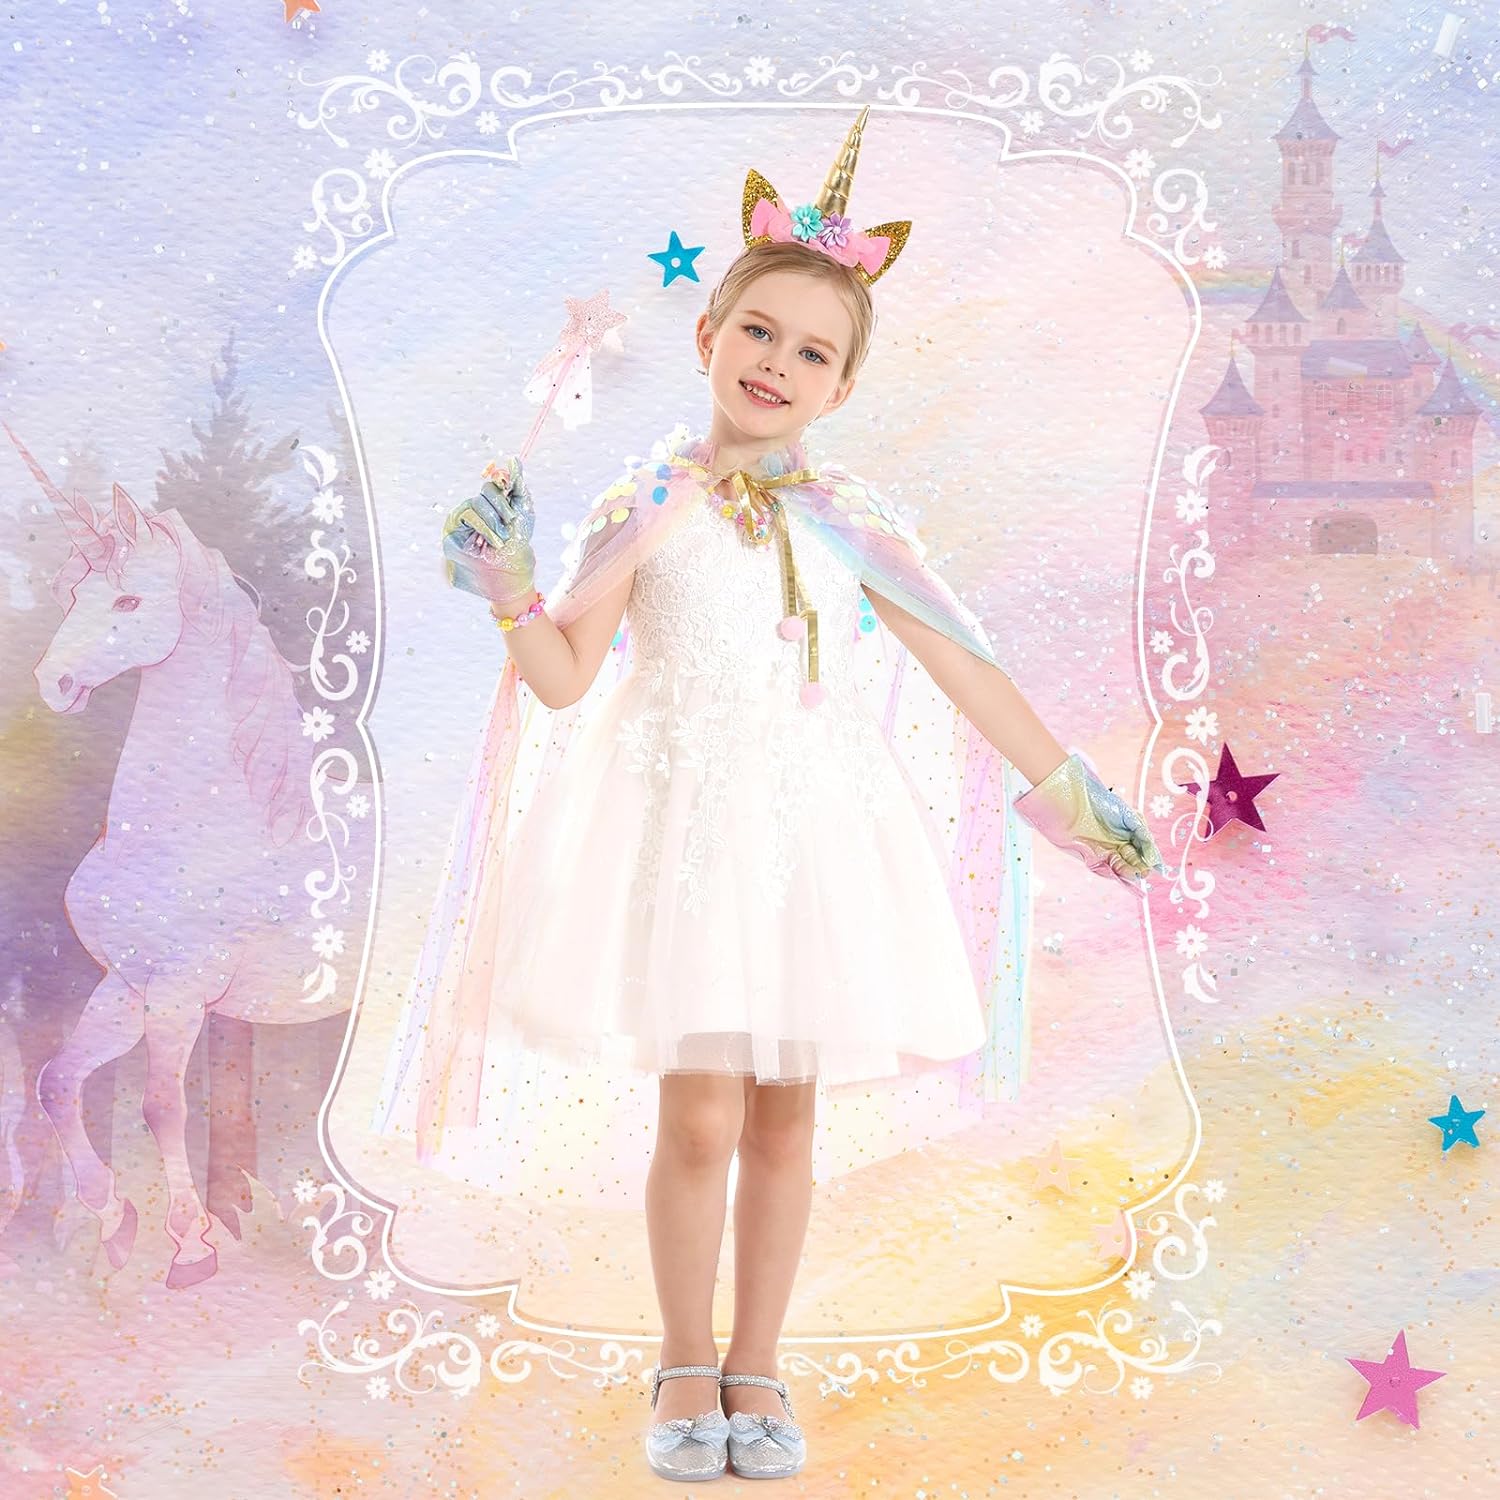 Princess Cape,Dress up Clothes for Little Girls,Princess Costume Dress - Cykapu